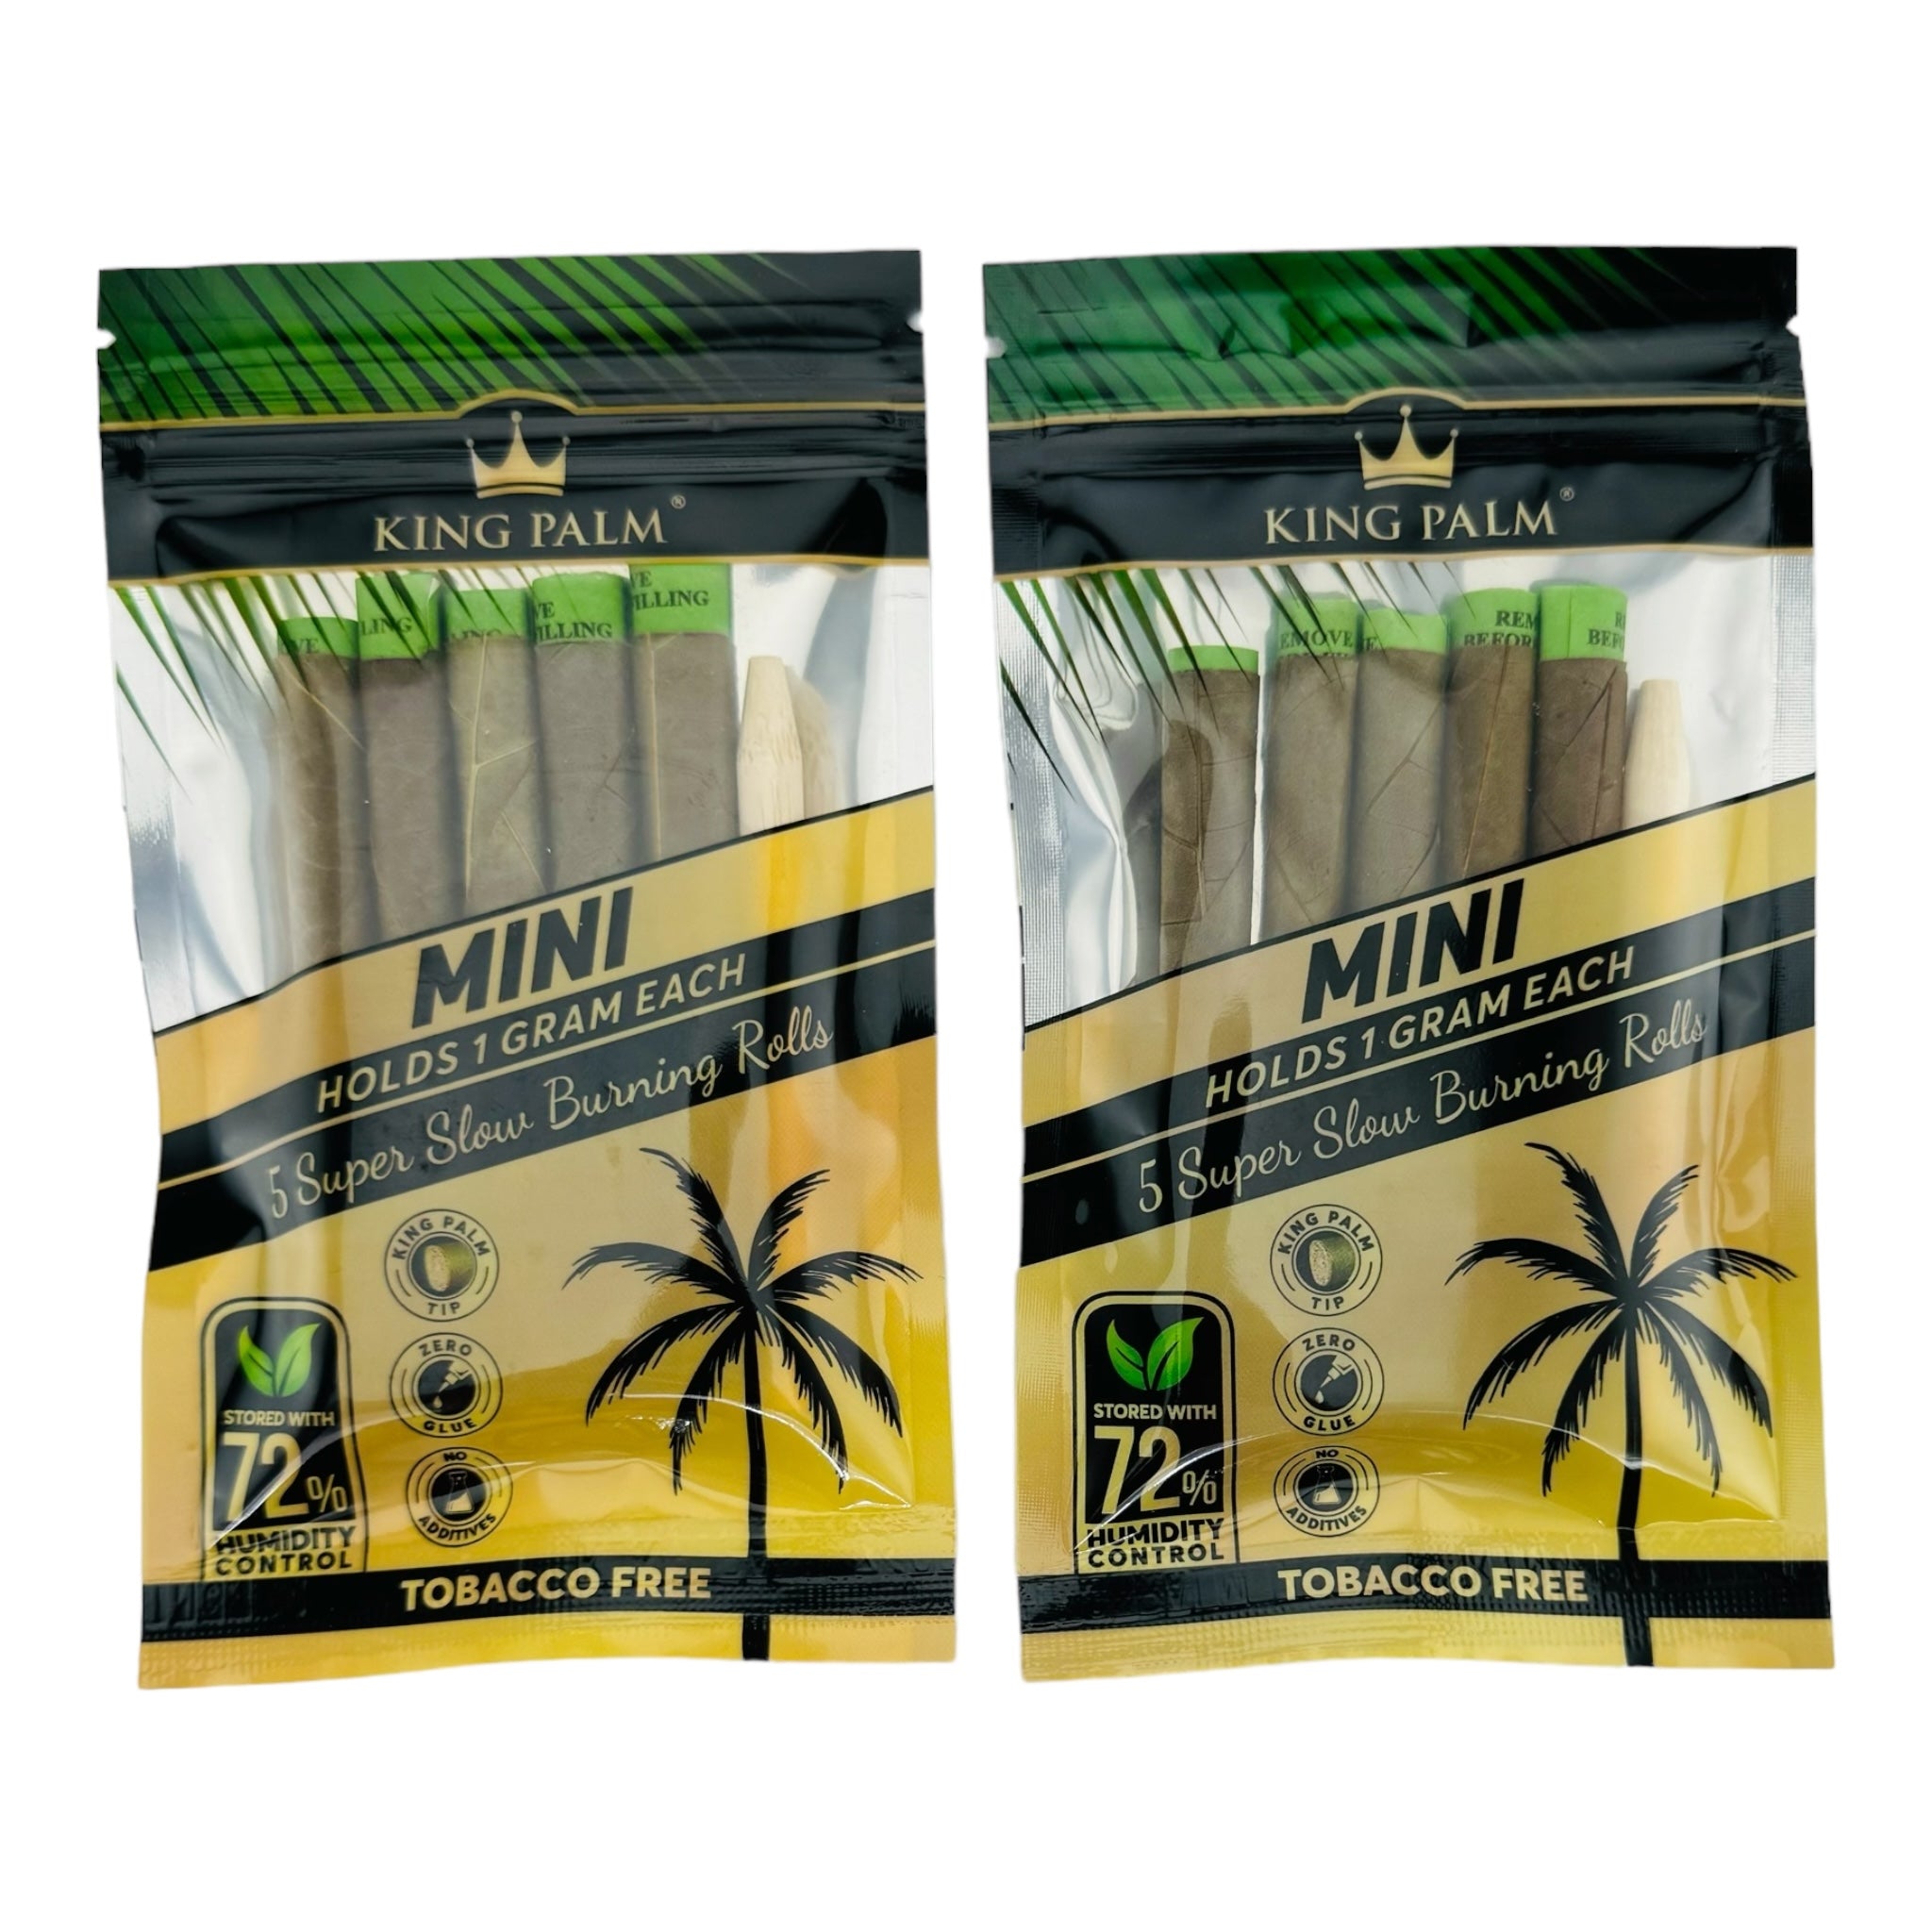 King palm wraps 5ct mini for sale